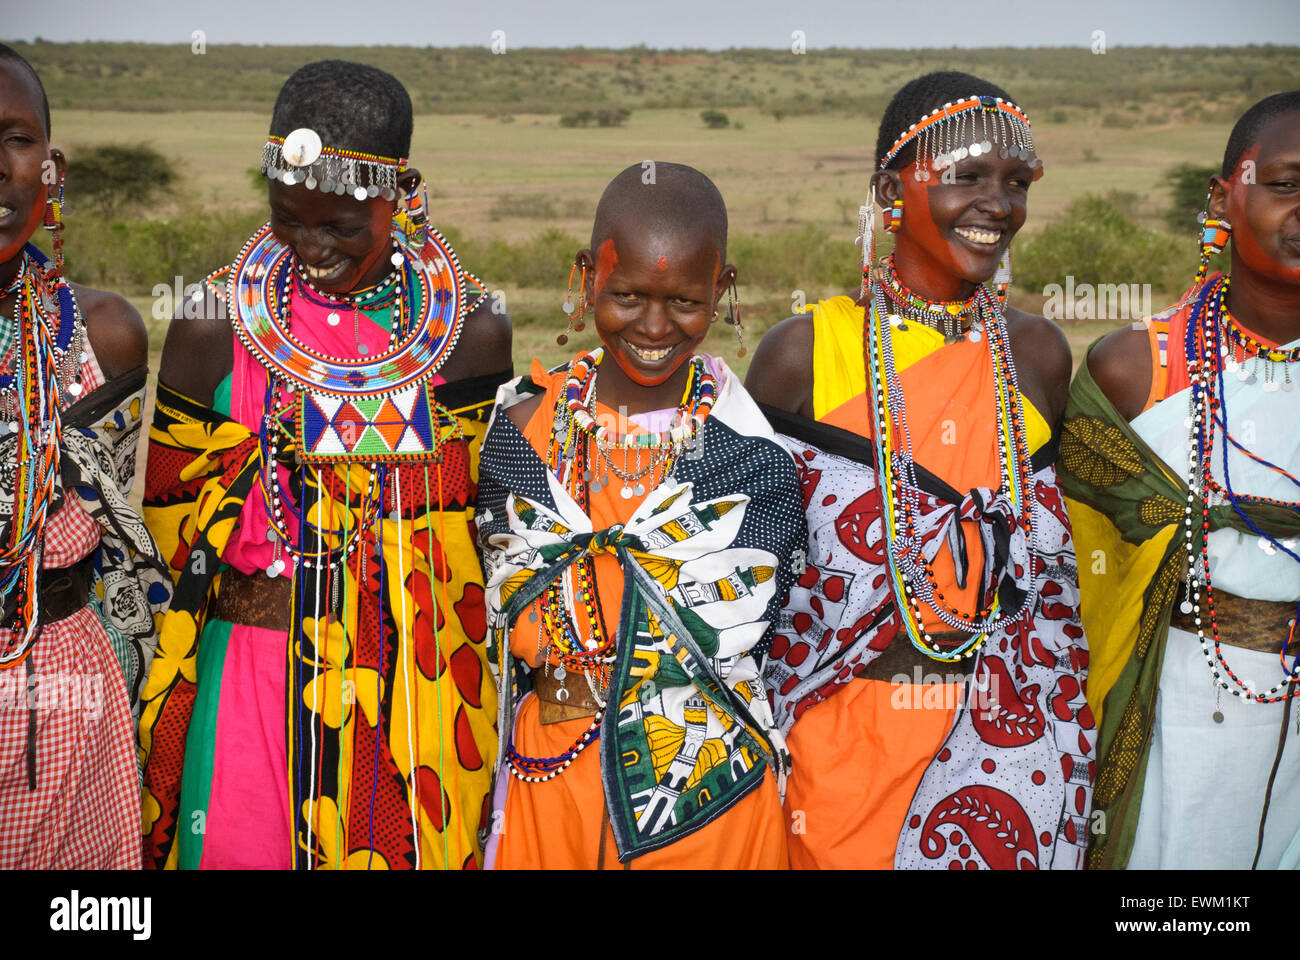 Masai women wearing colorful traditional dress, singing, laughing and smiling in a village near the Masai Mara, Kenya, Africa Stock Photo